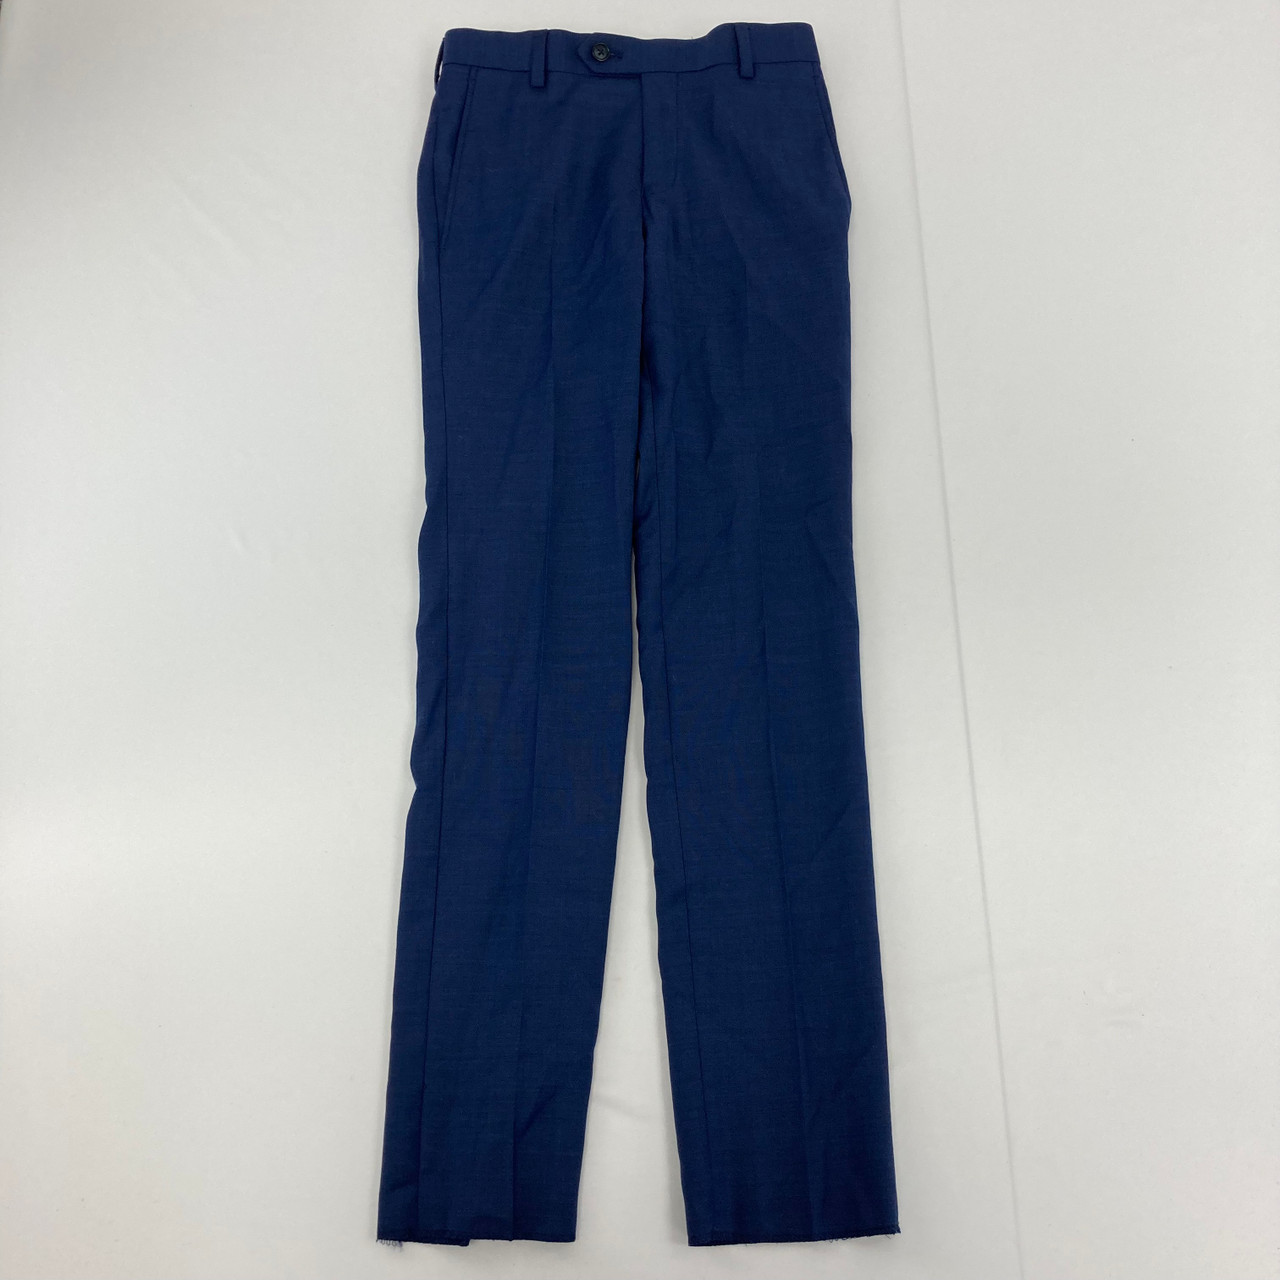 Michael Kors Plain Blue Dress Pants 8R - Kidzmax